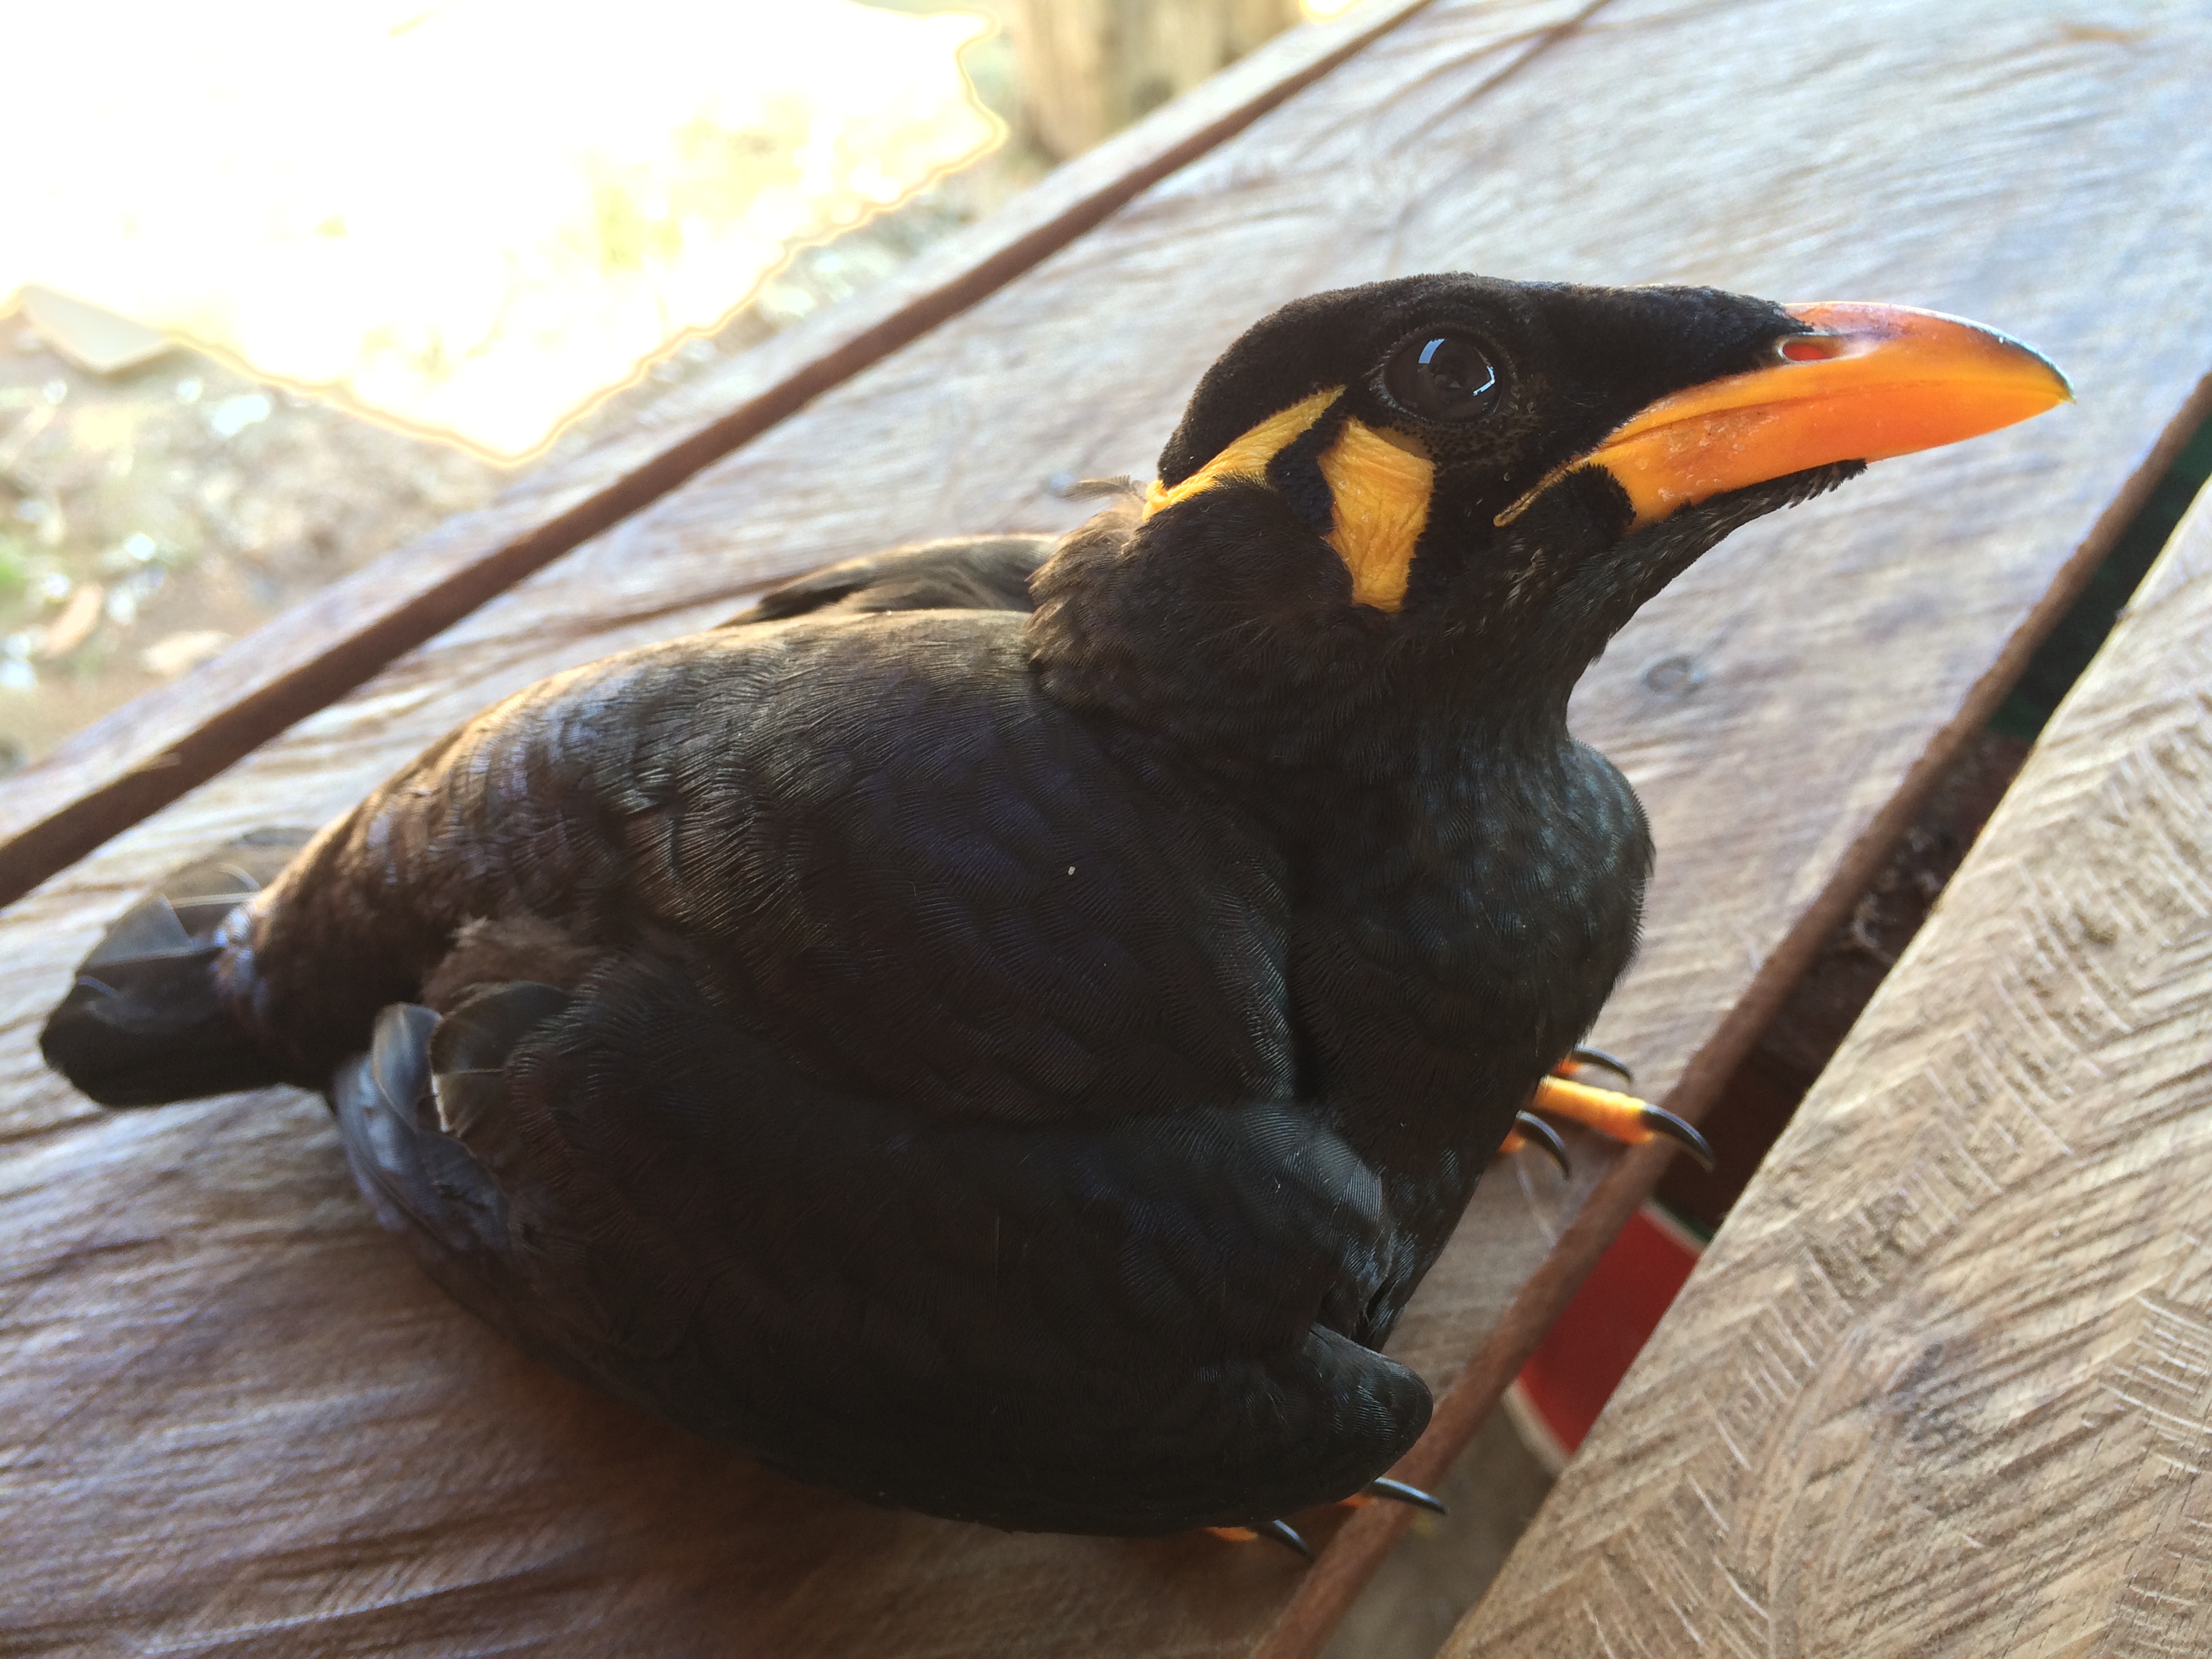 Orange Beaked Bird, Animal, Beak, Bird, Black, HQ Photo